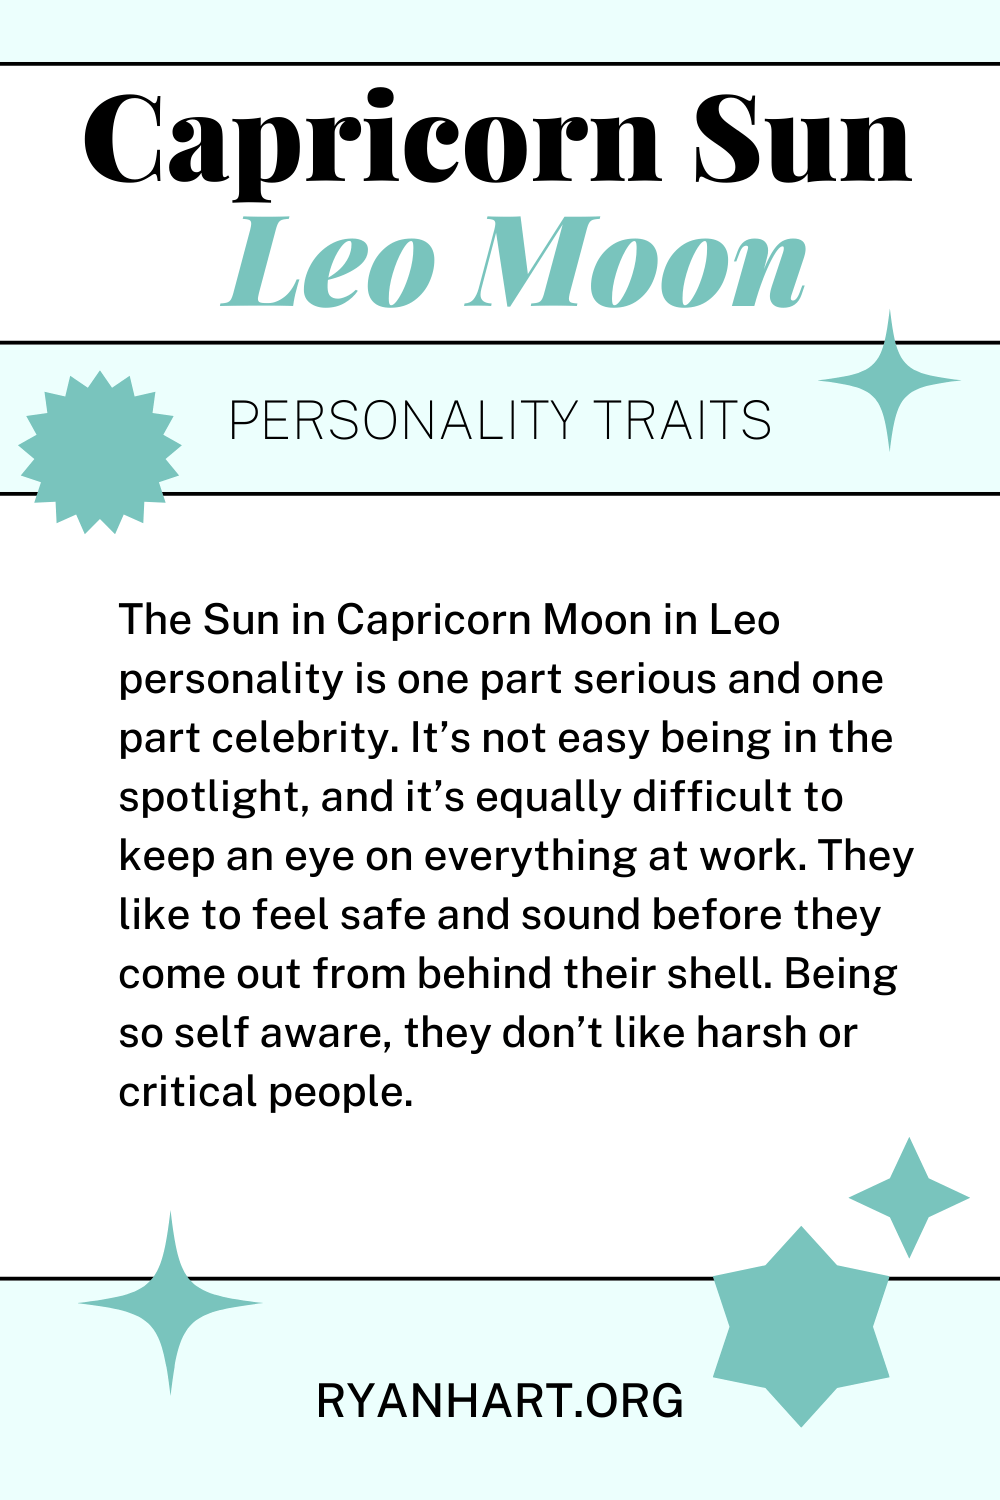  Nodweddion Personoliaeth Capricorn Sun Leo Moon